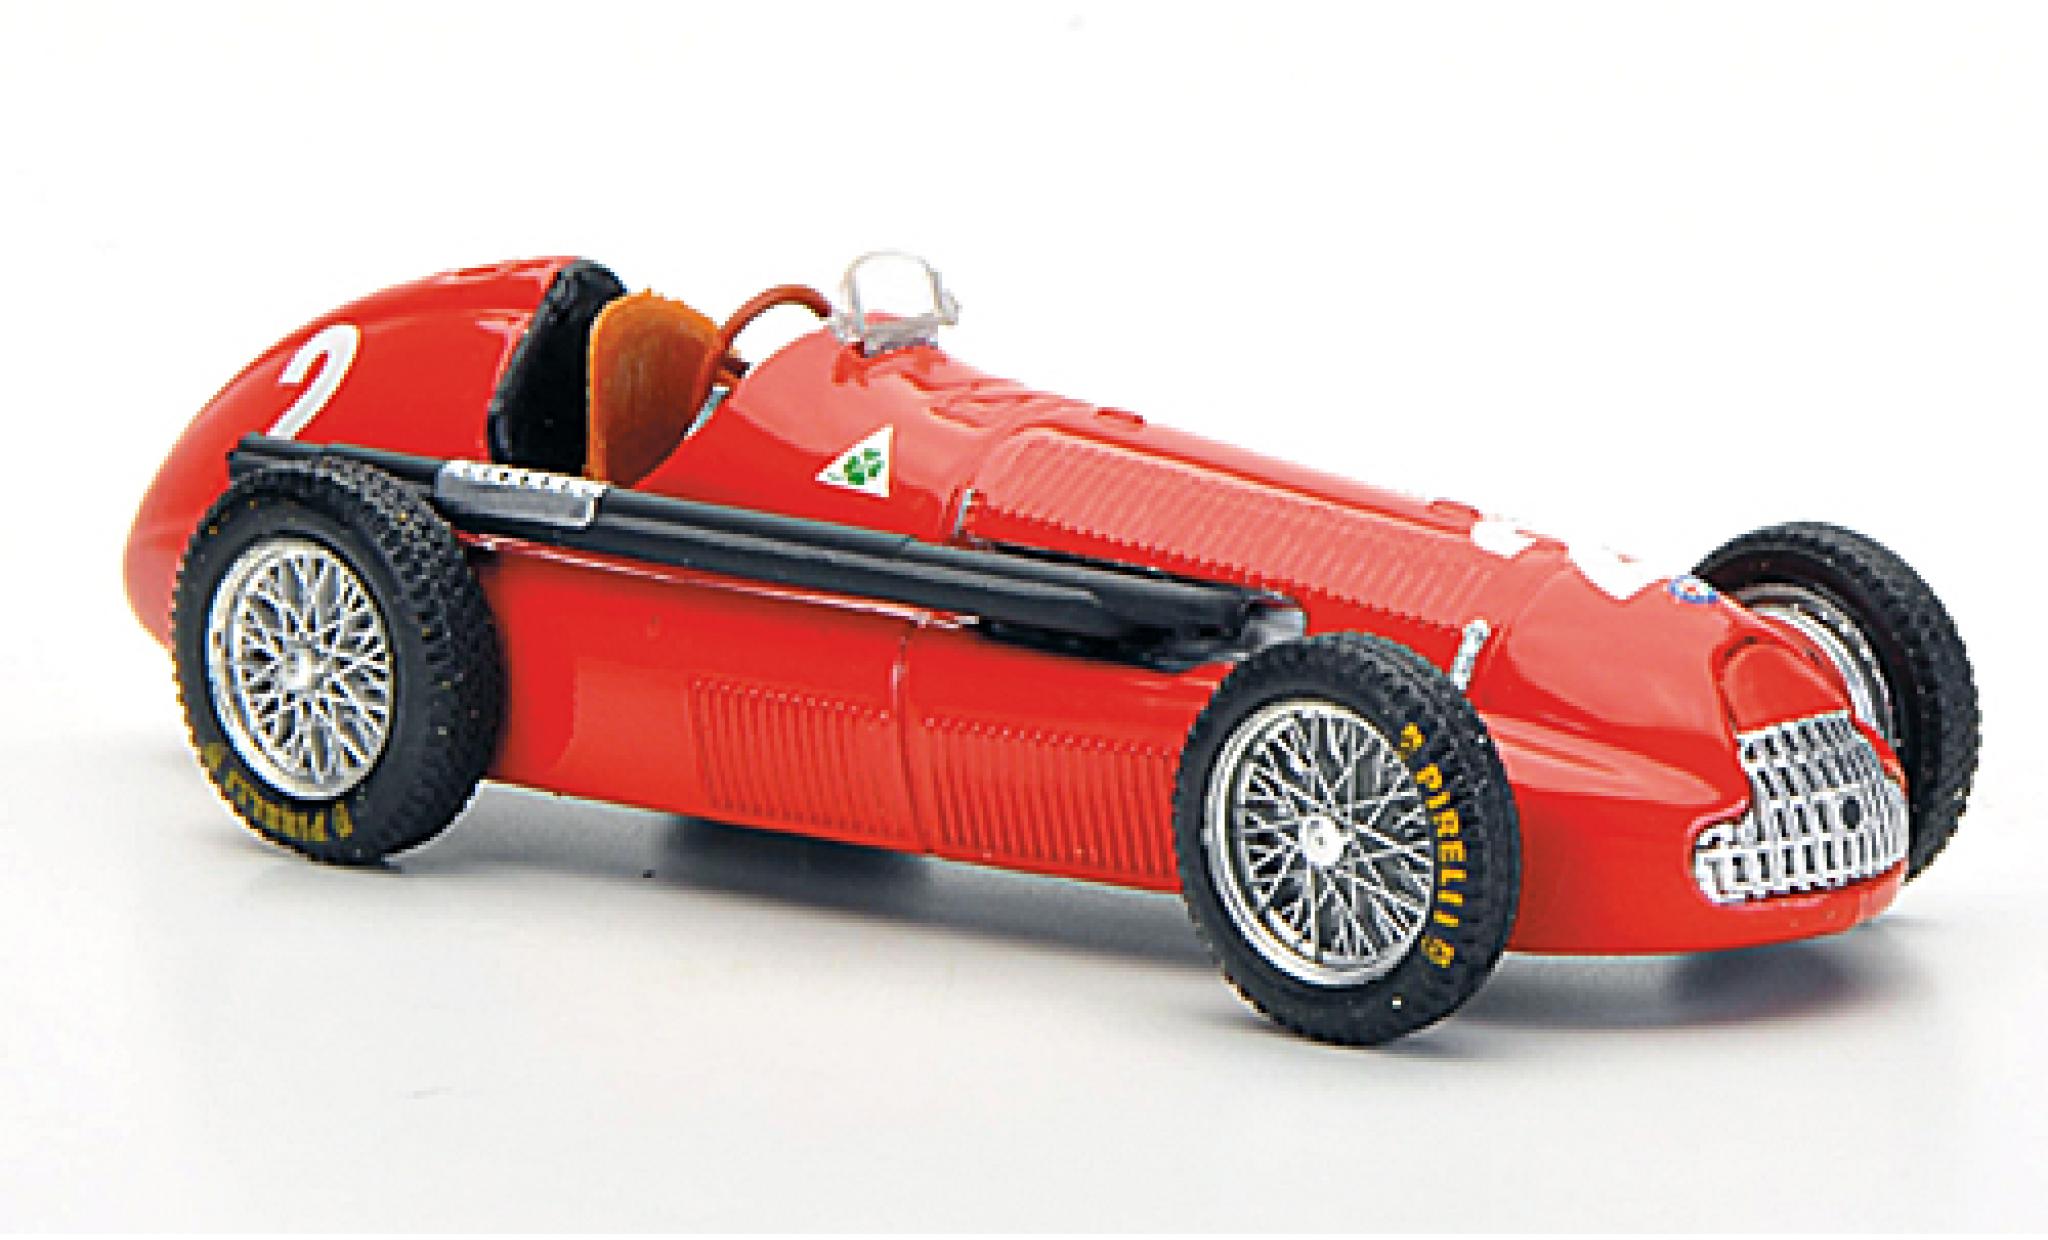 Brumm 1:43 JM Fangio Alfa Romeo 158 formula 1 1950 R036 modelo carro R036  8020677000839